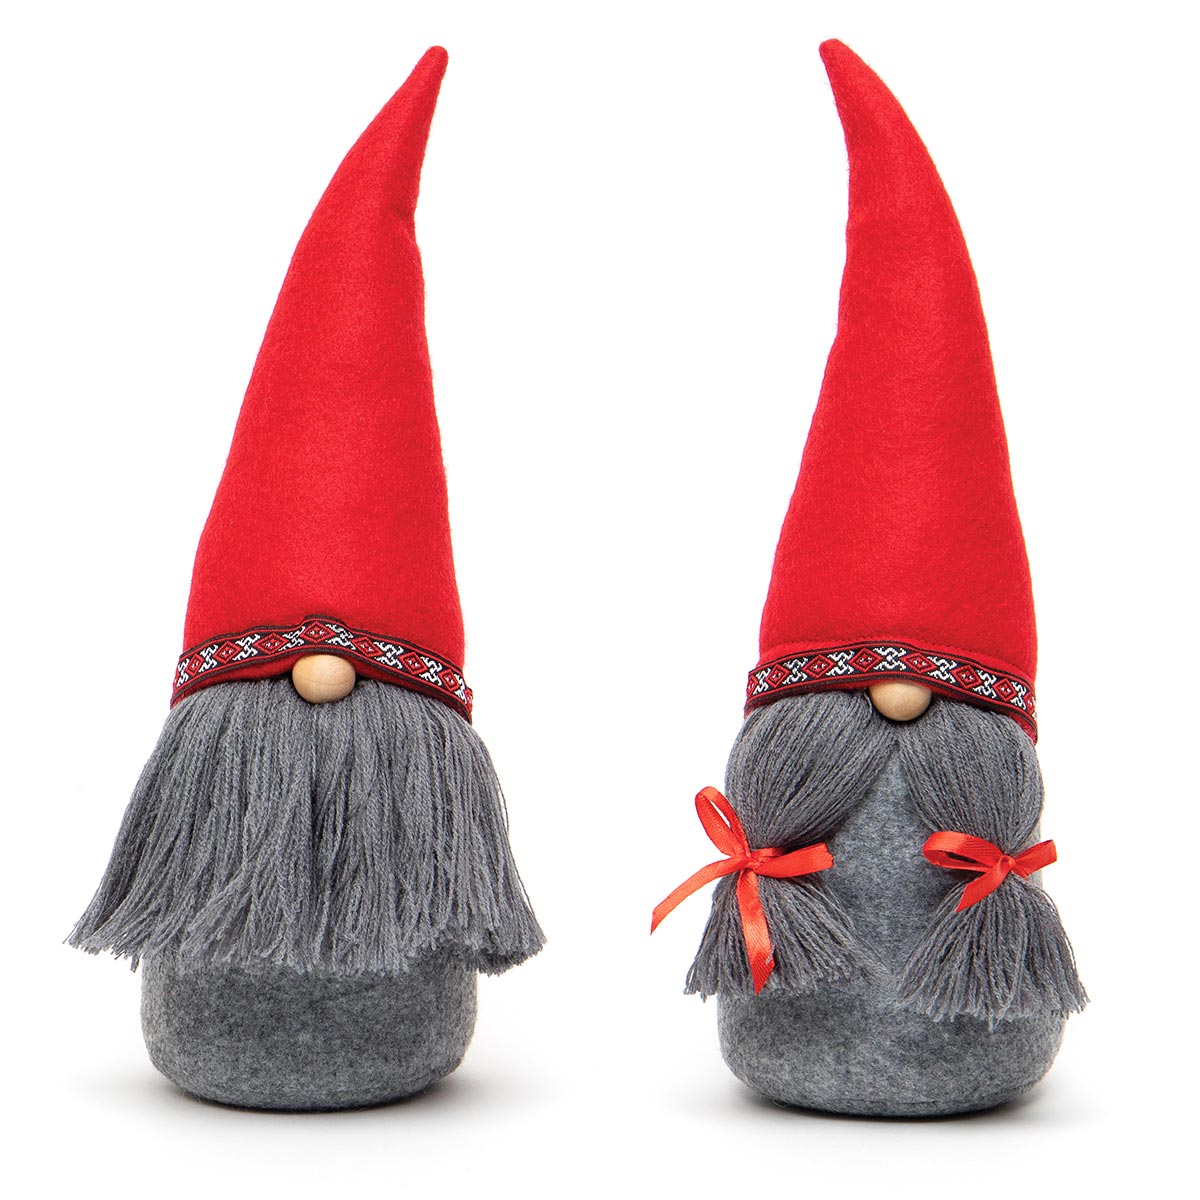 Fritz & Freda Gnome